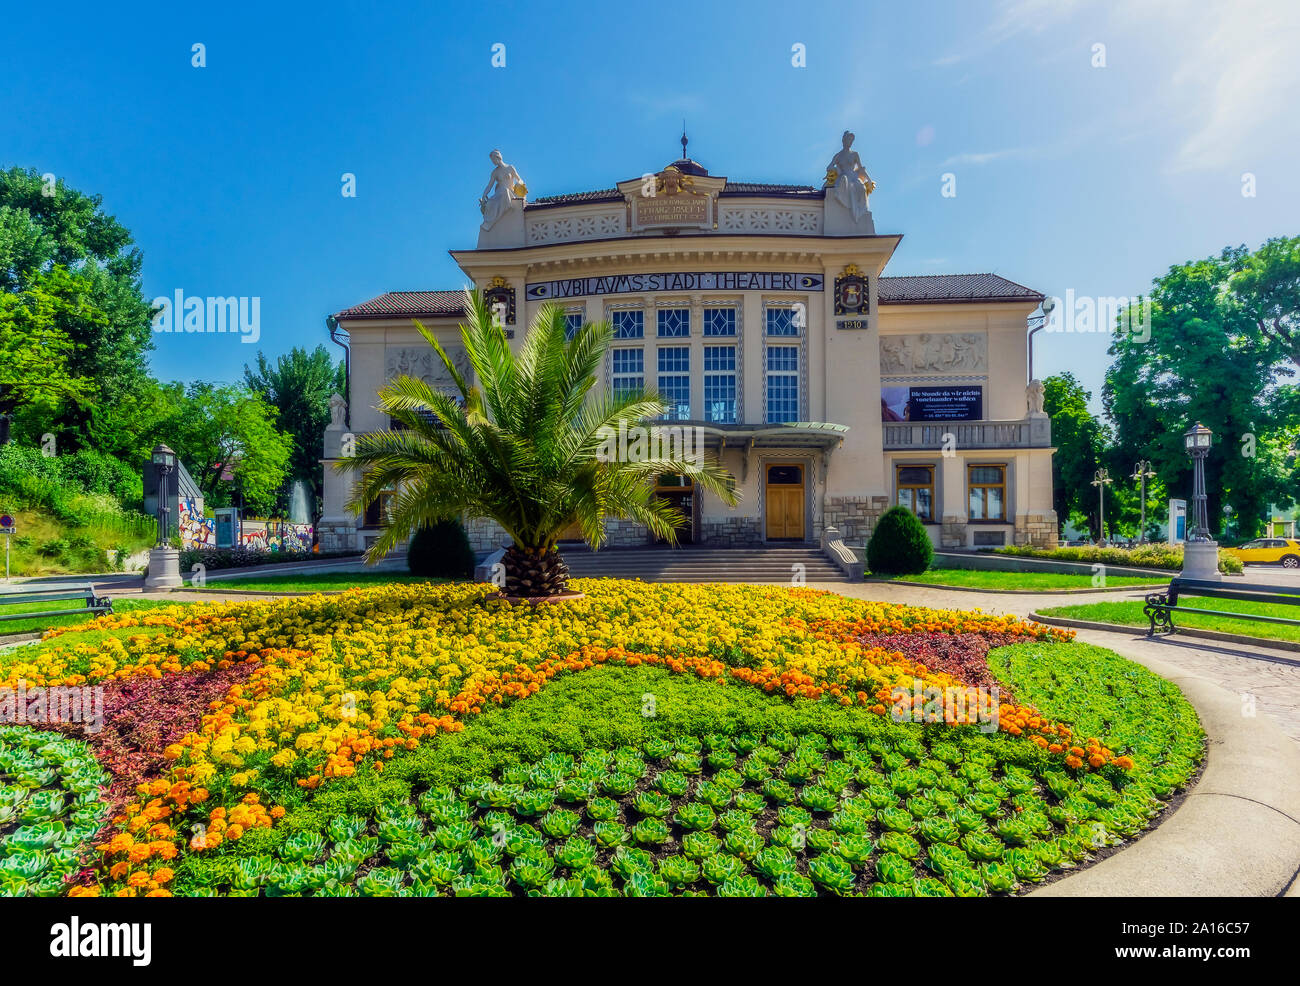 Austria, Carinthia, Klagenfurt, Stadttheater Klagenfurt with flowerbed in foreground Stock Photo